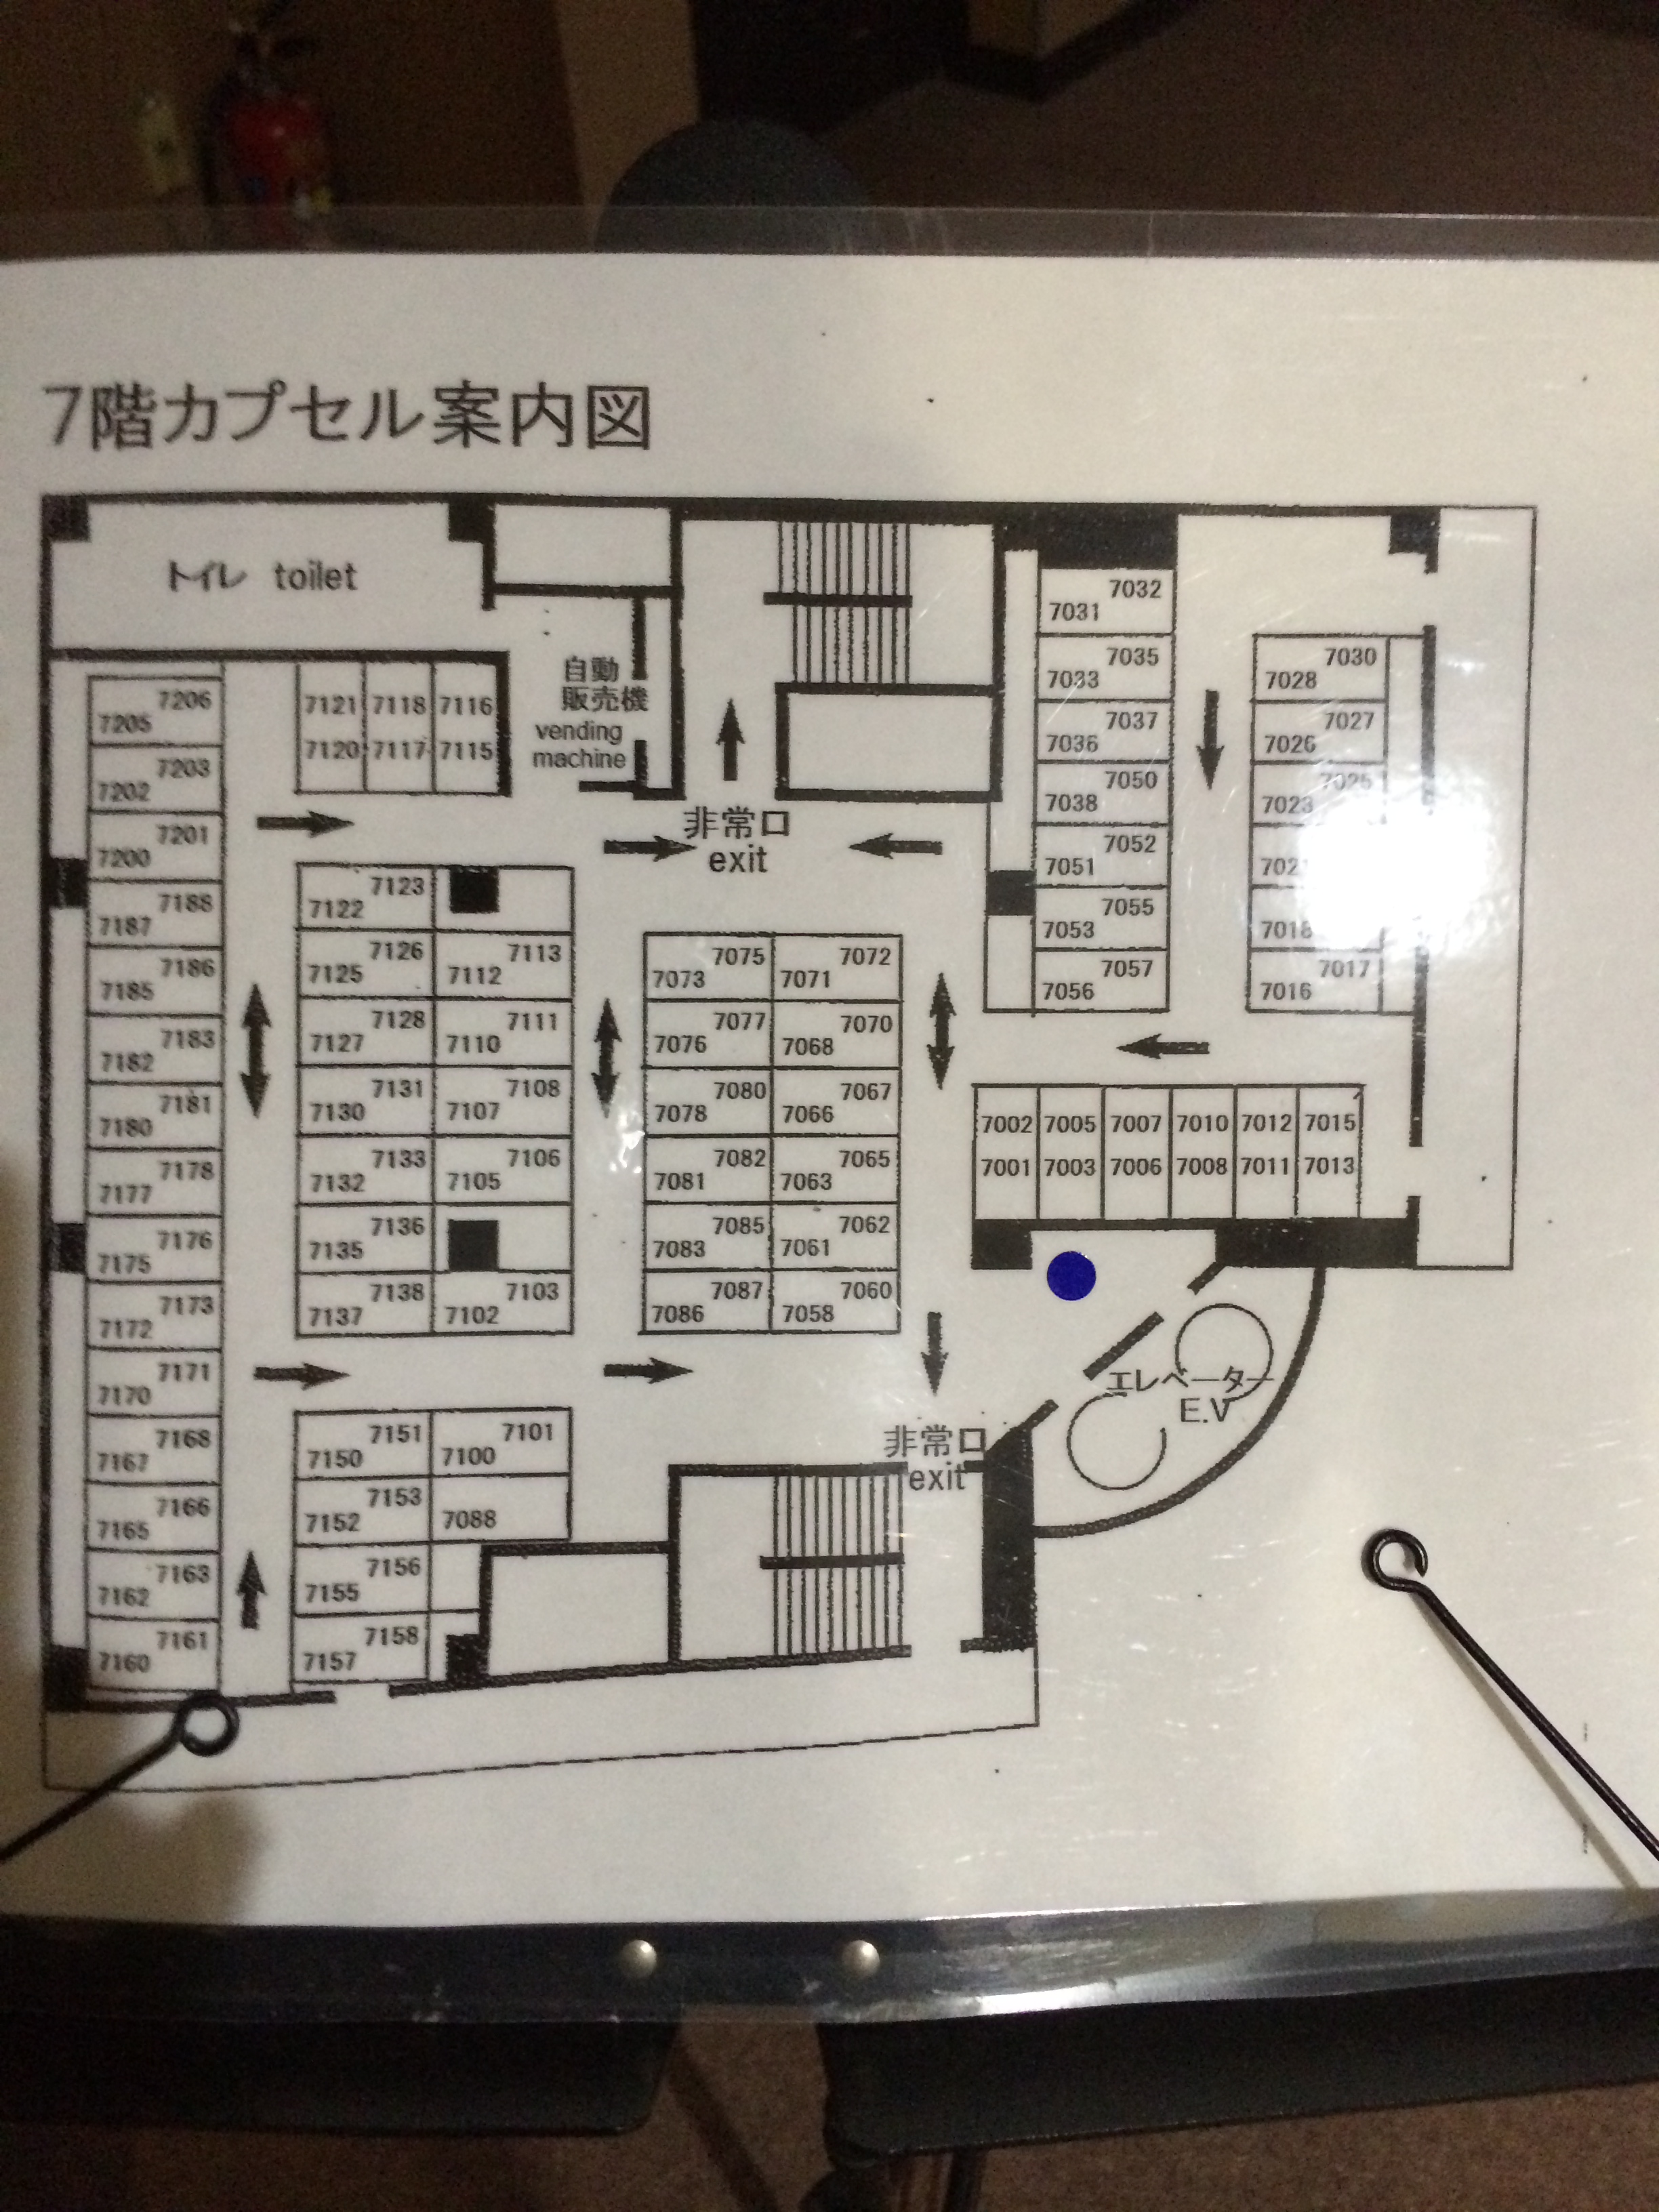 7th floor map